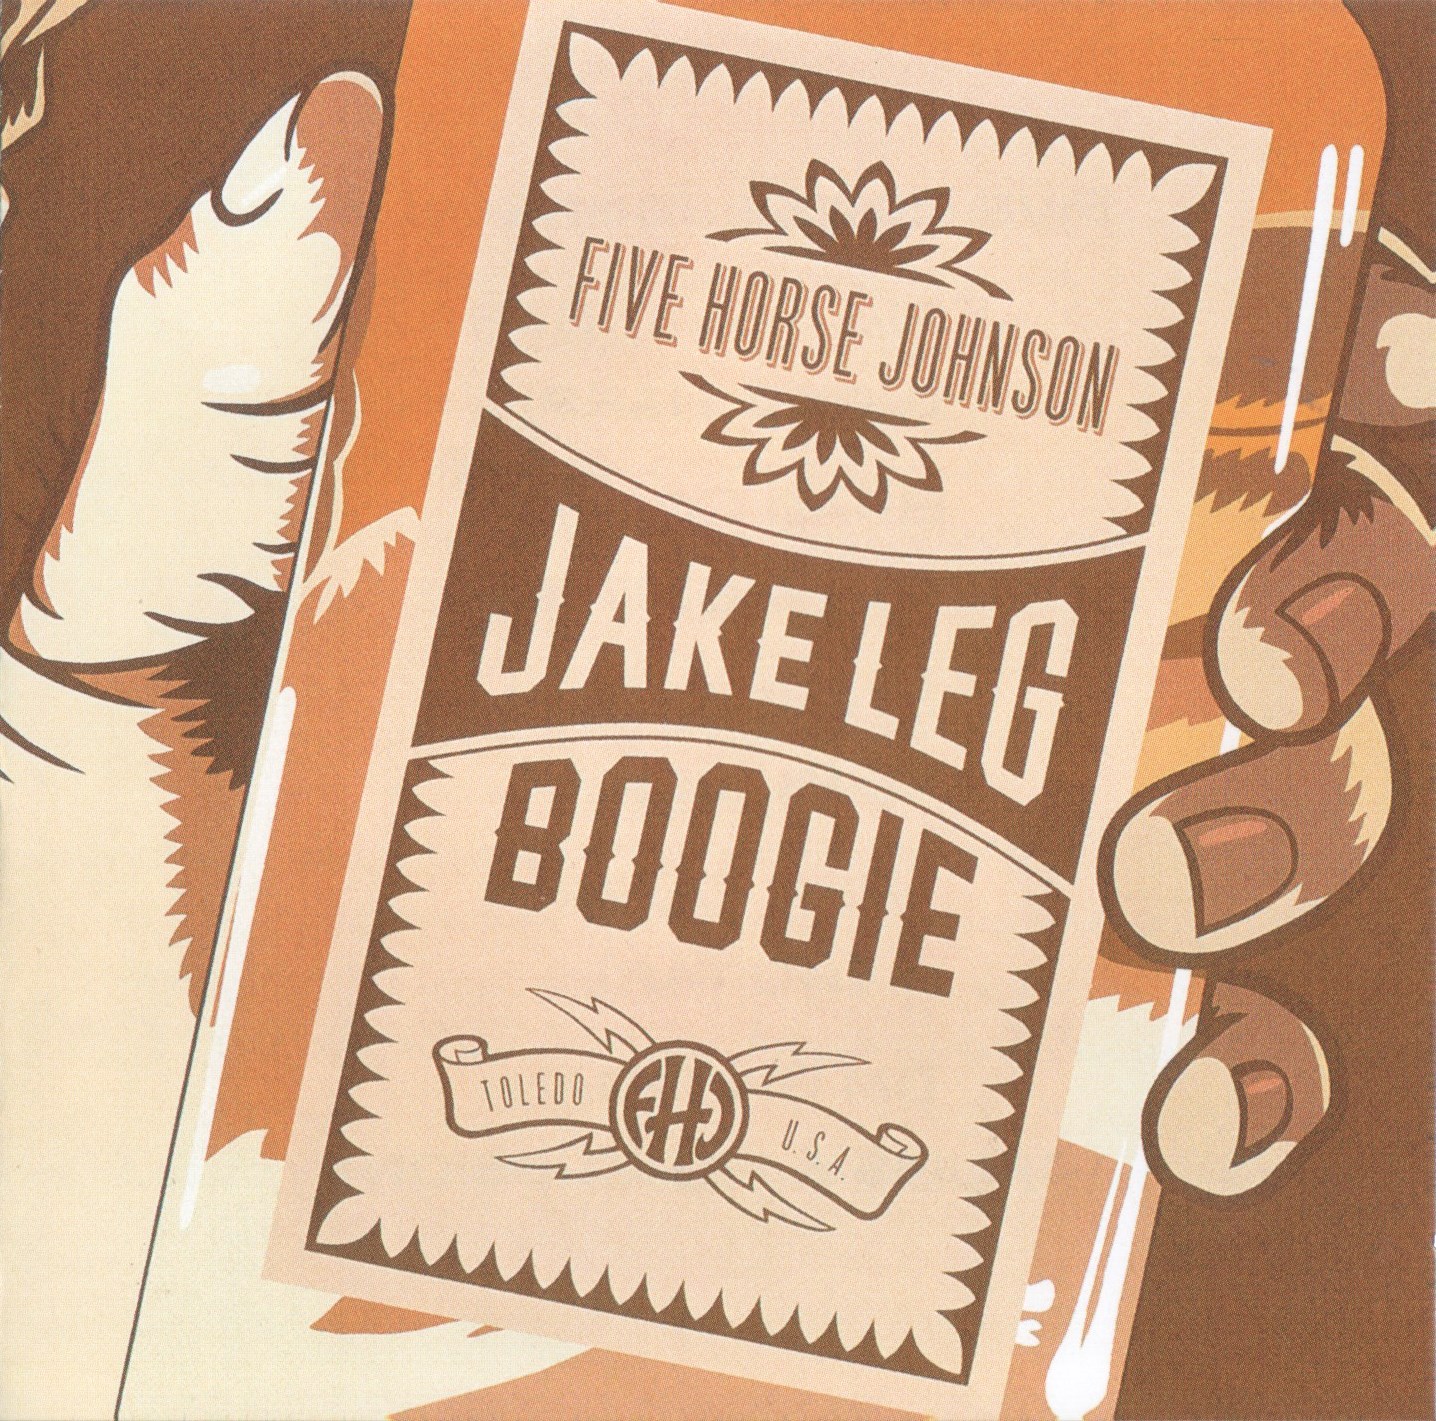 Five Horse Johnson (2017) - Jake Leg Boogie (Rock) (flac)